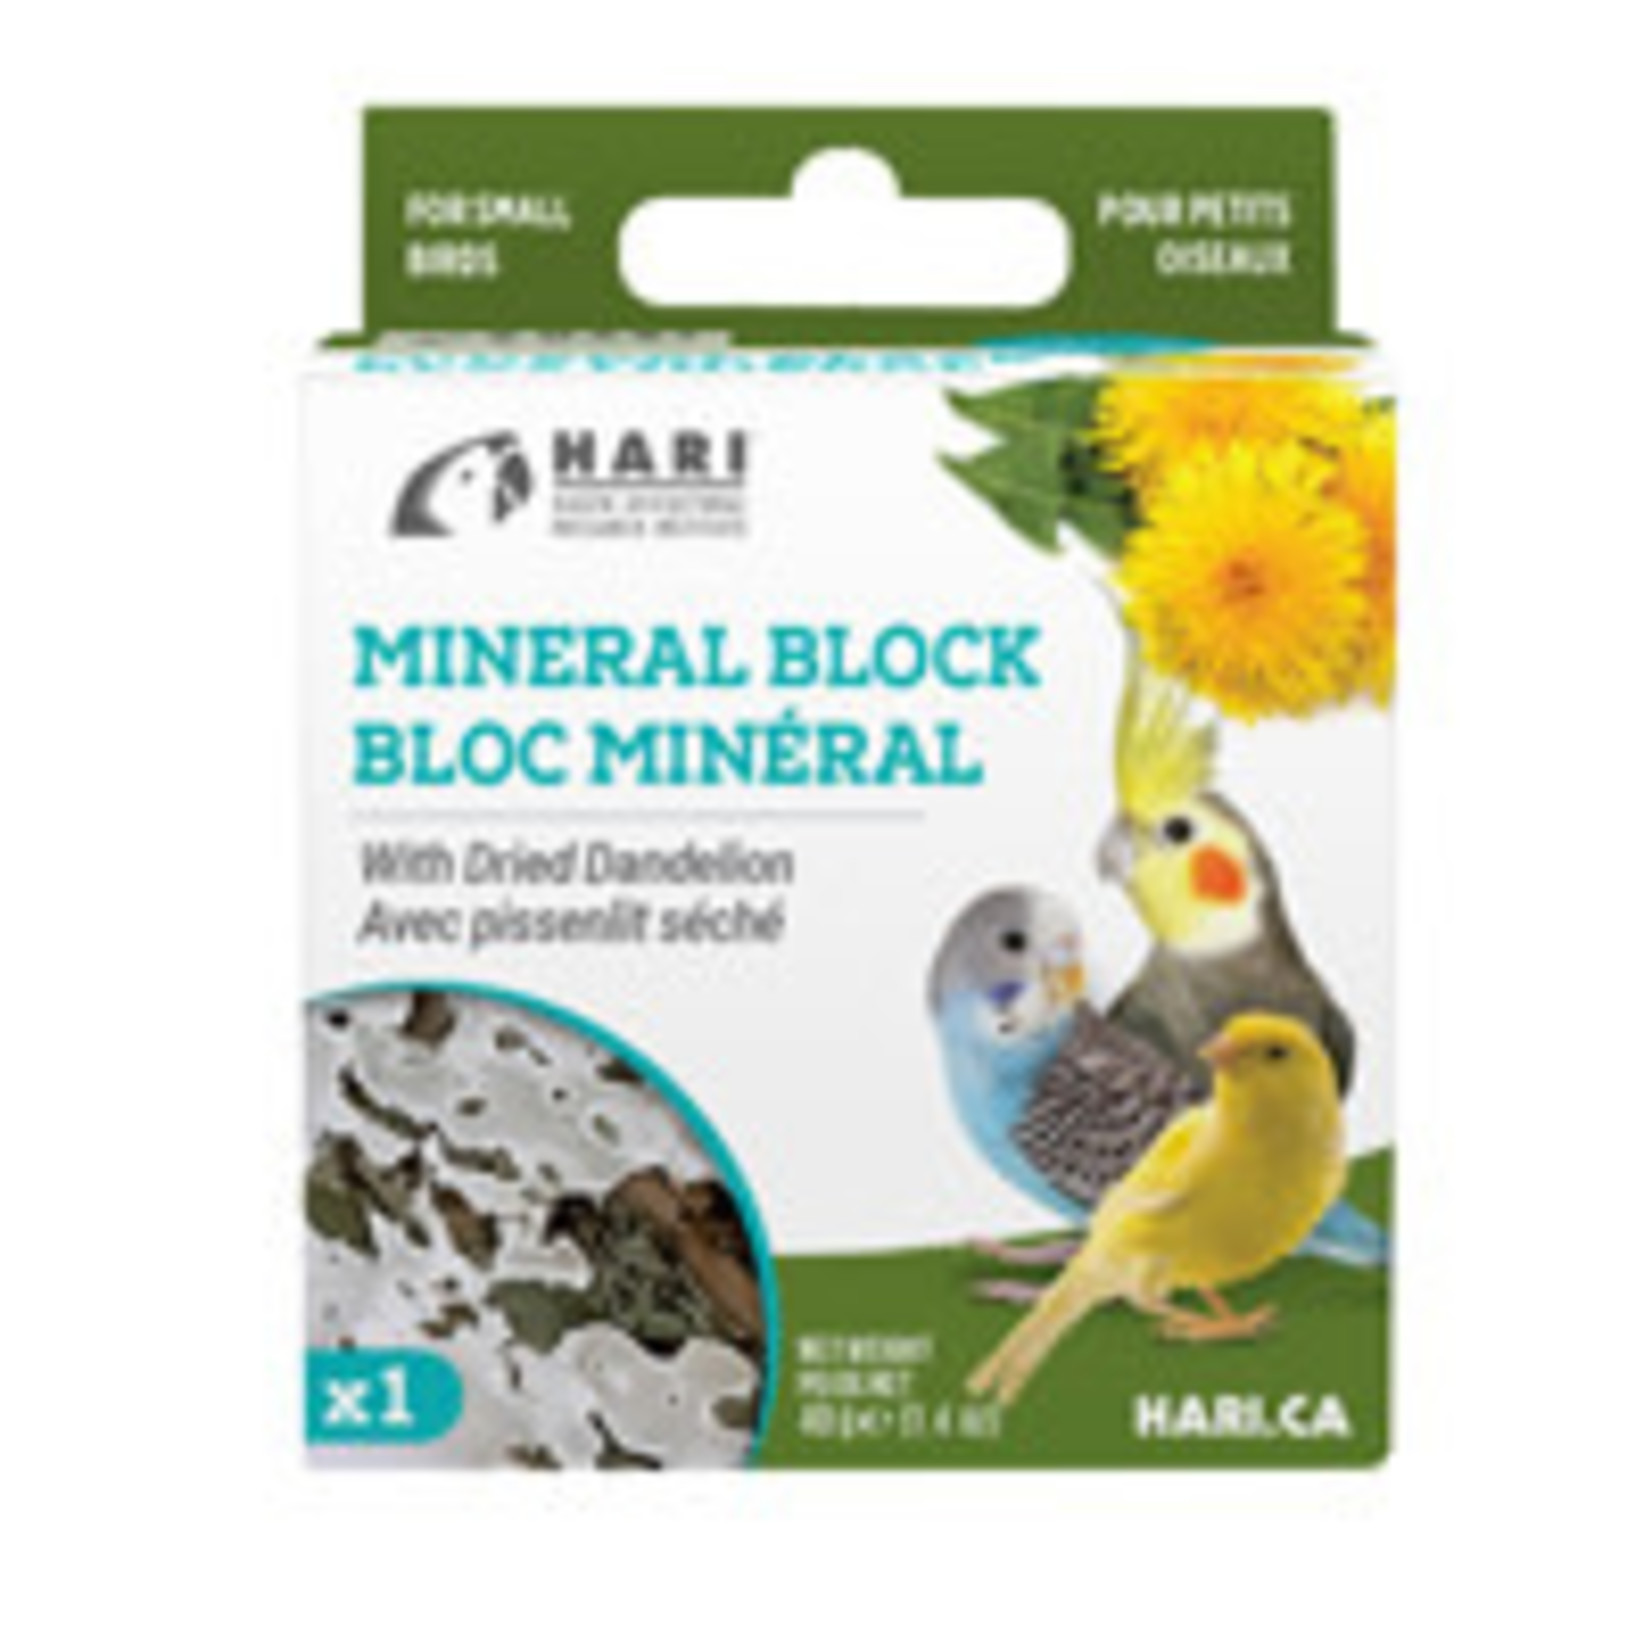 HARI HARI Mineral Block, Dried Dandelion, 1.2 oz